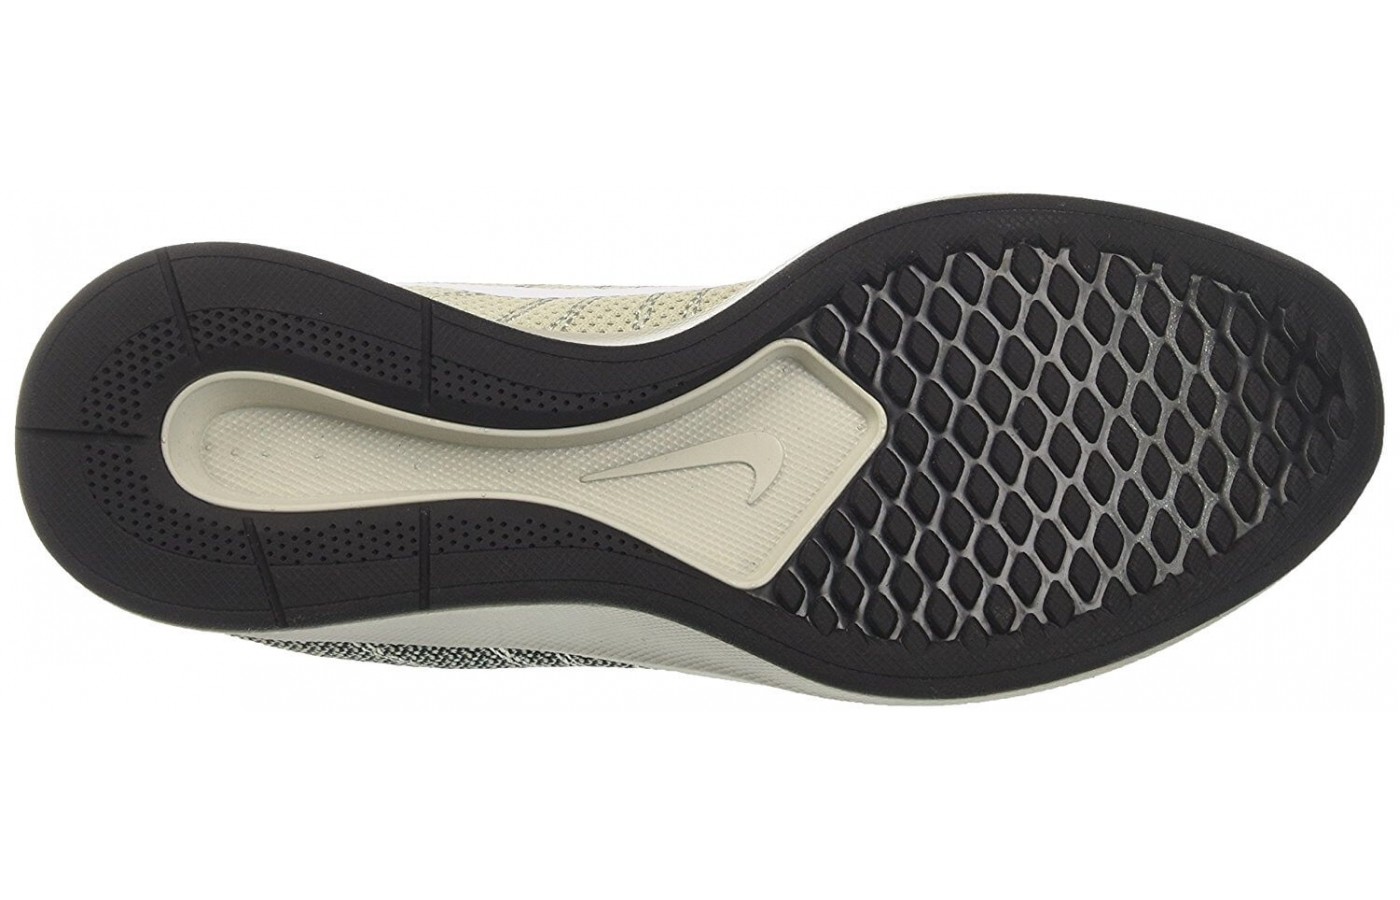 The Nike Dualtone Racer sole